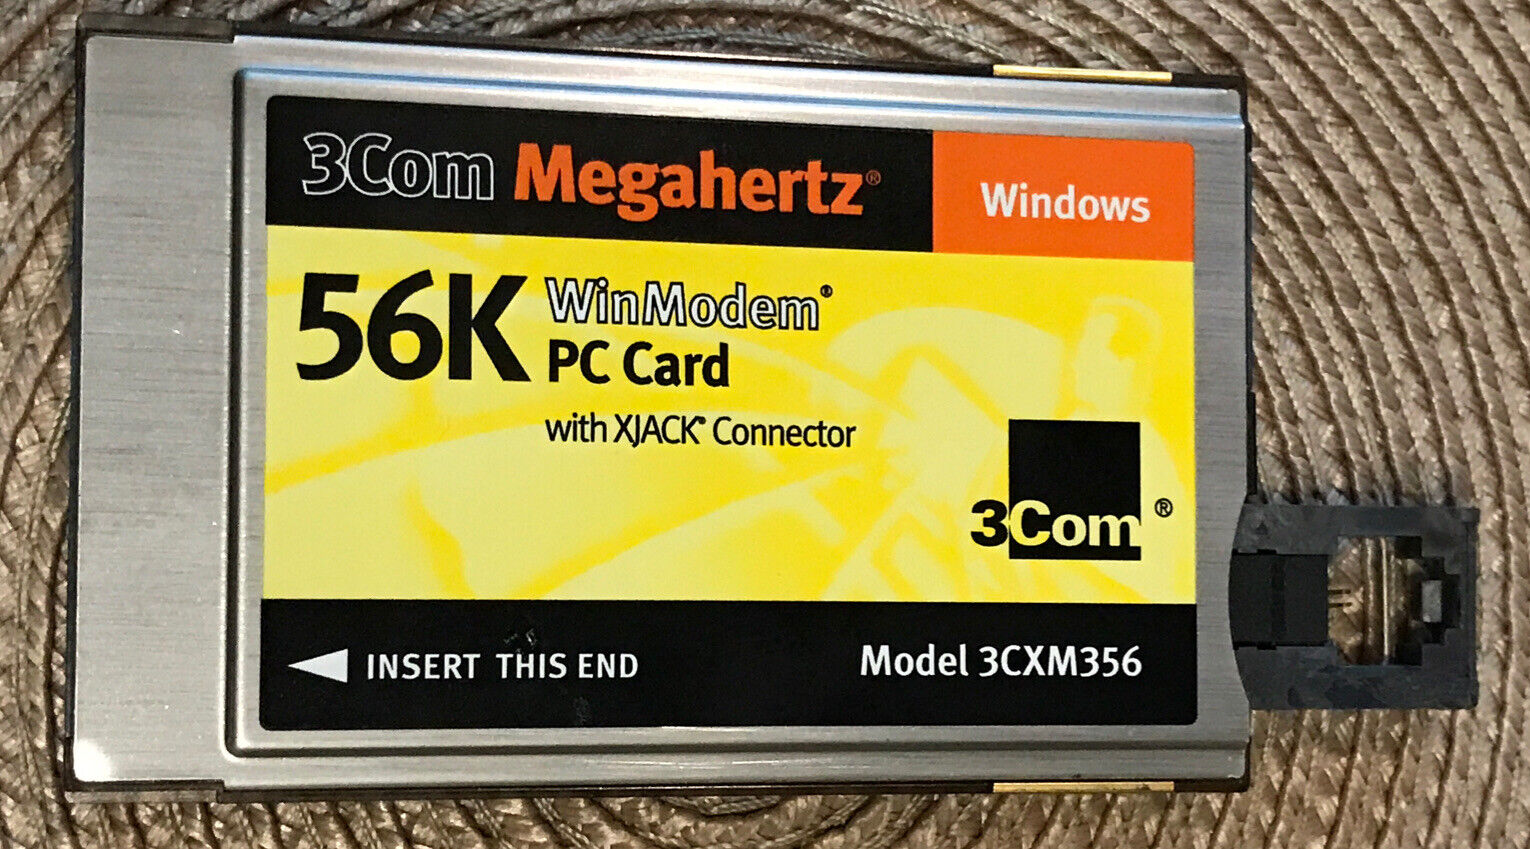 3COM 3CXM356  Megahertz 56k WinModem PC Card - Xjack Connector